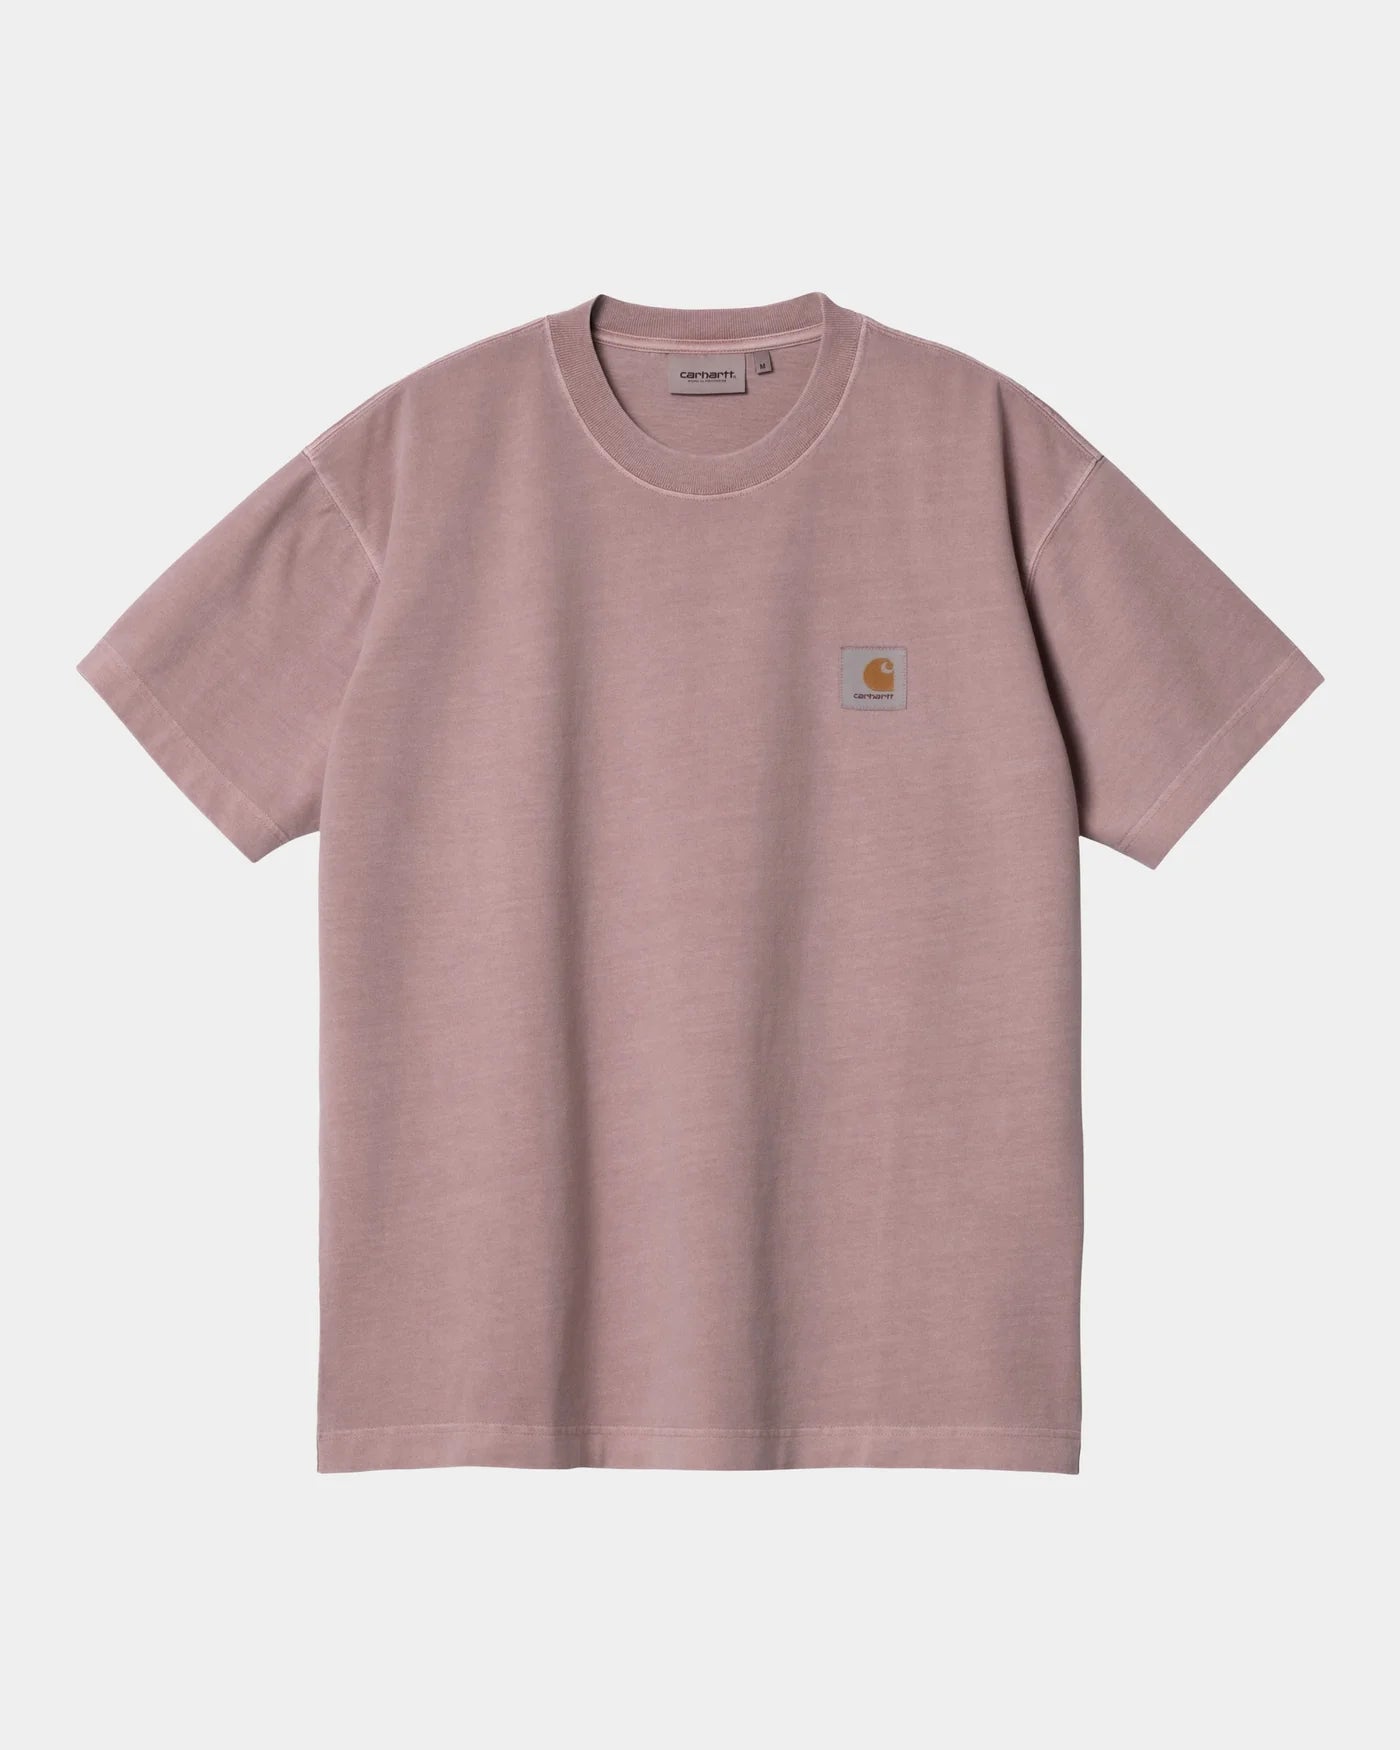 Carhartt WIP S/S Vista T-Shirt (Glassy Pink garment dyed)